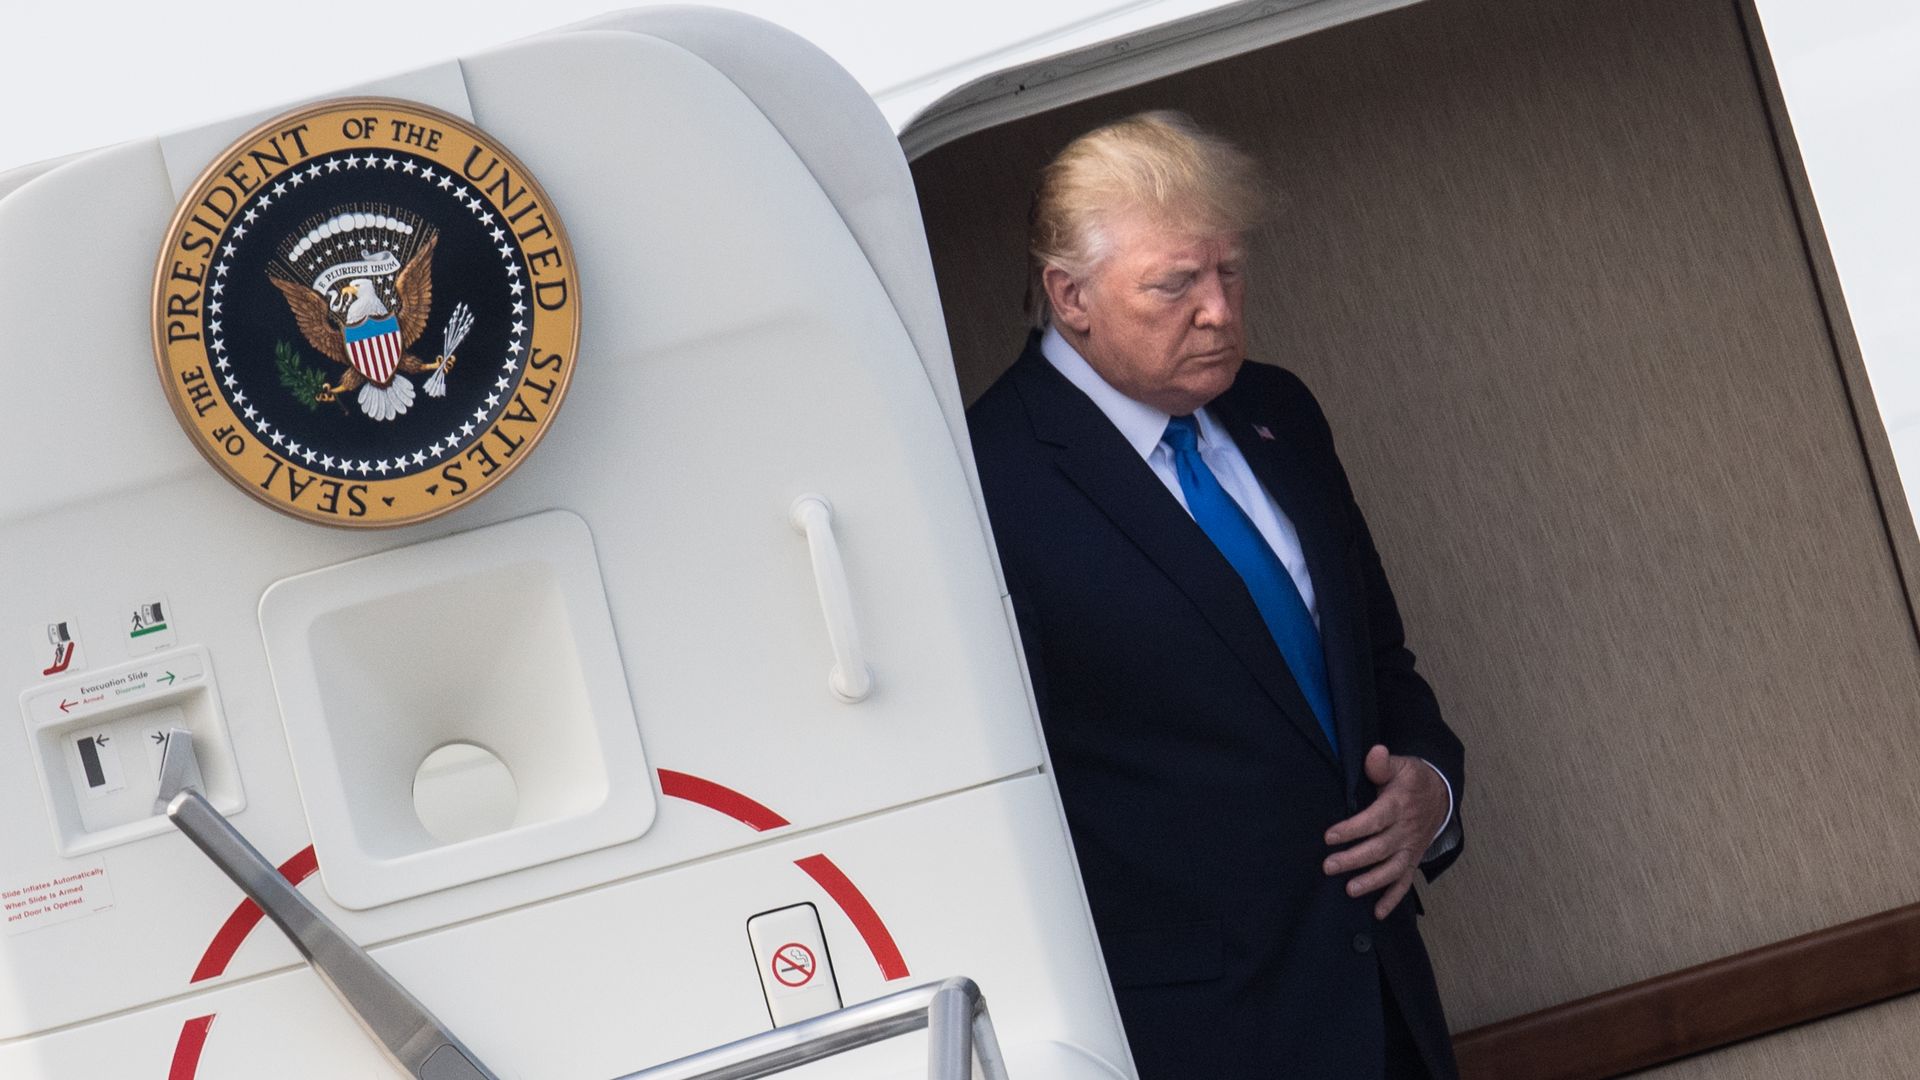 President Trump disembarking Air Force One